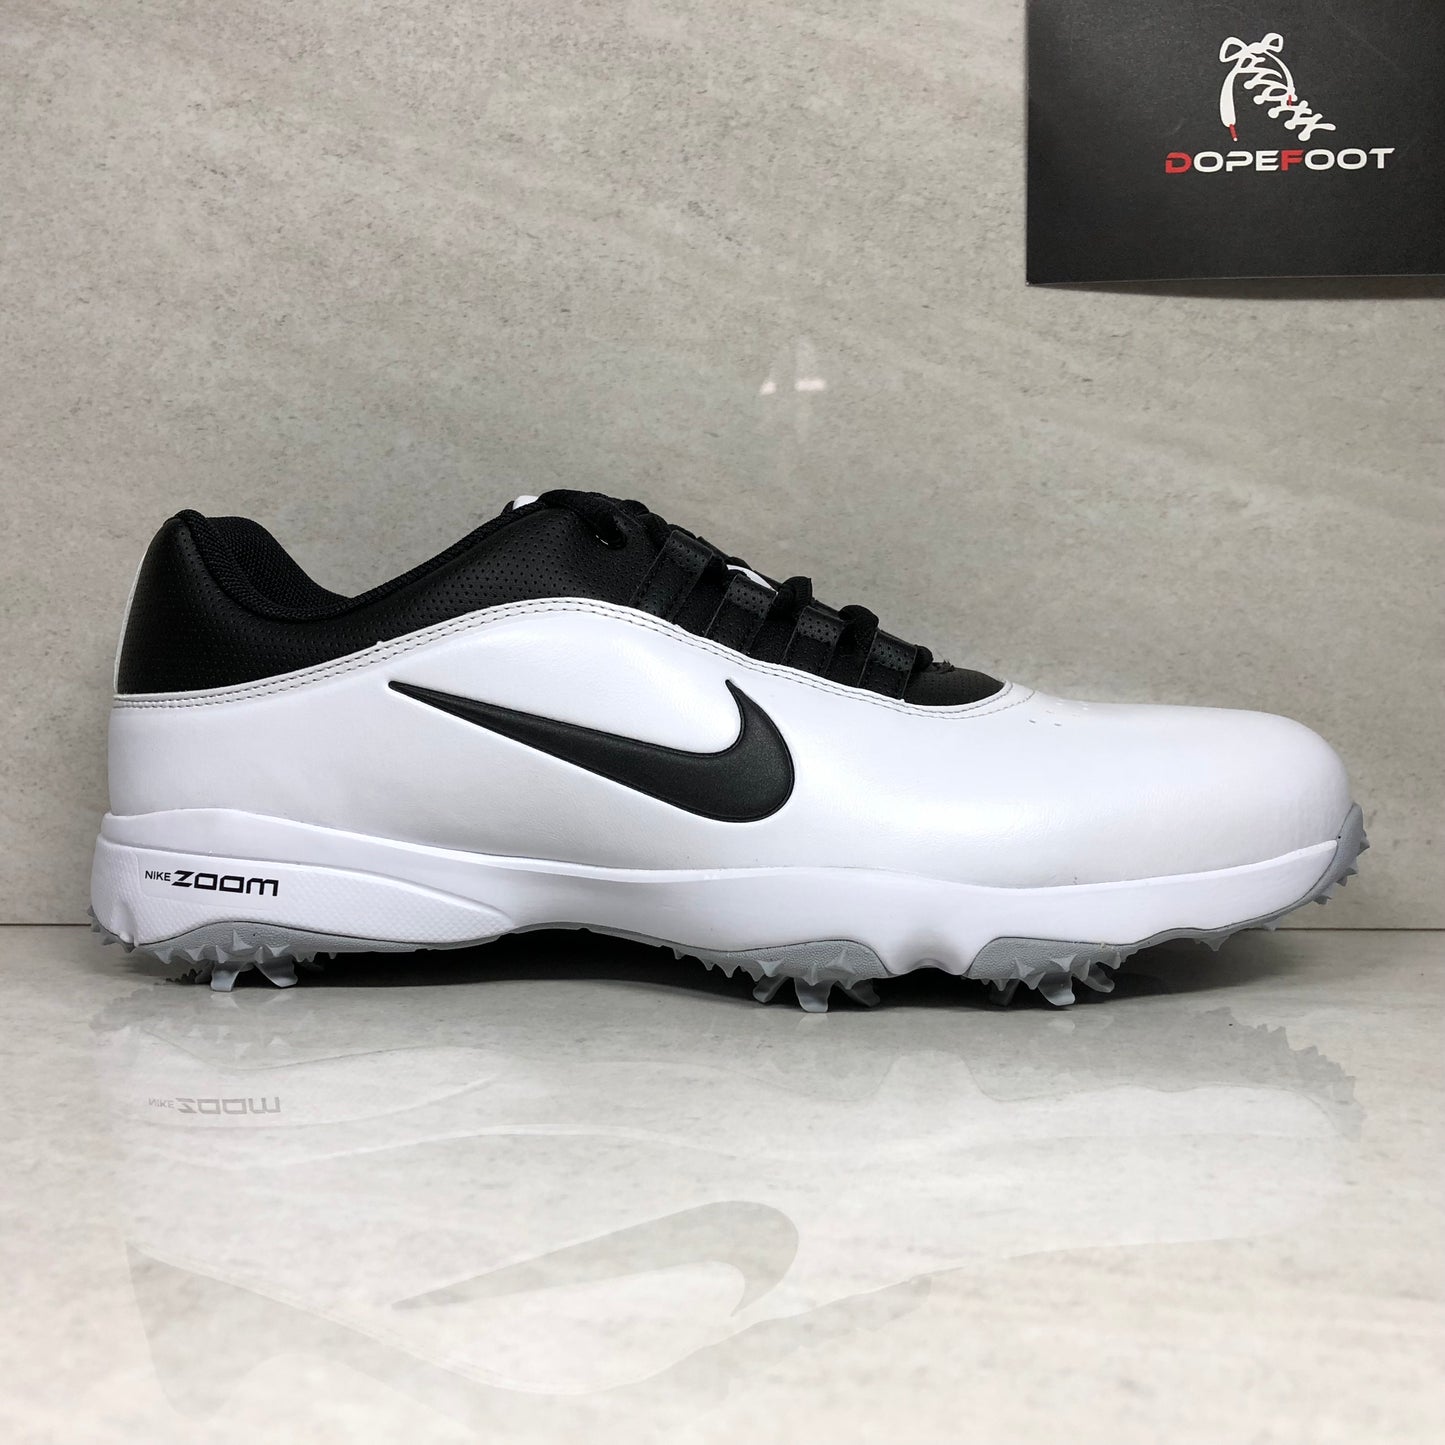 Nike Air Zoom Rival Golf Shoe Size 14 White/Black 878957 100